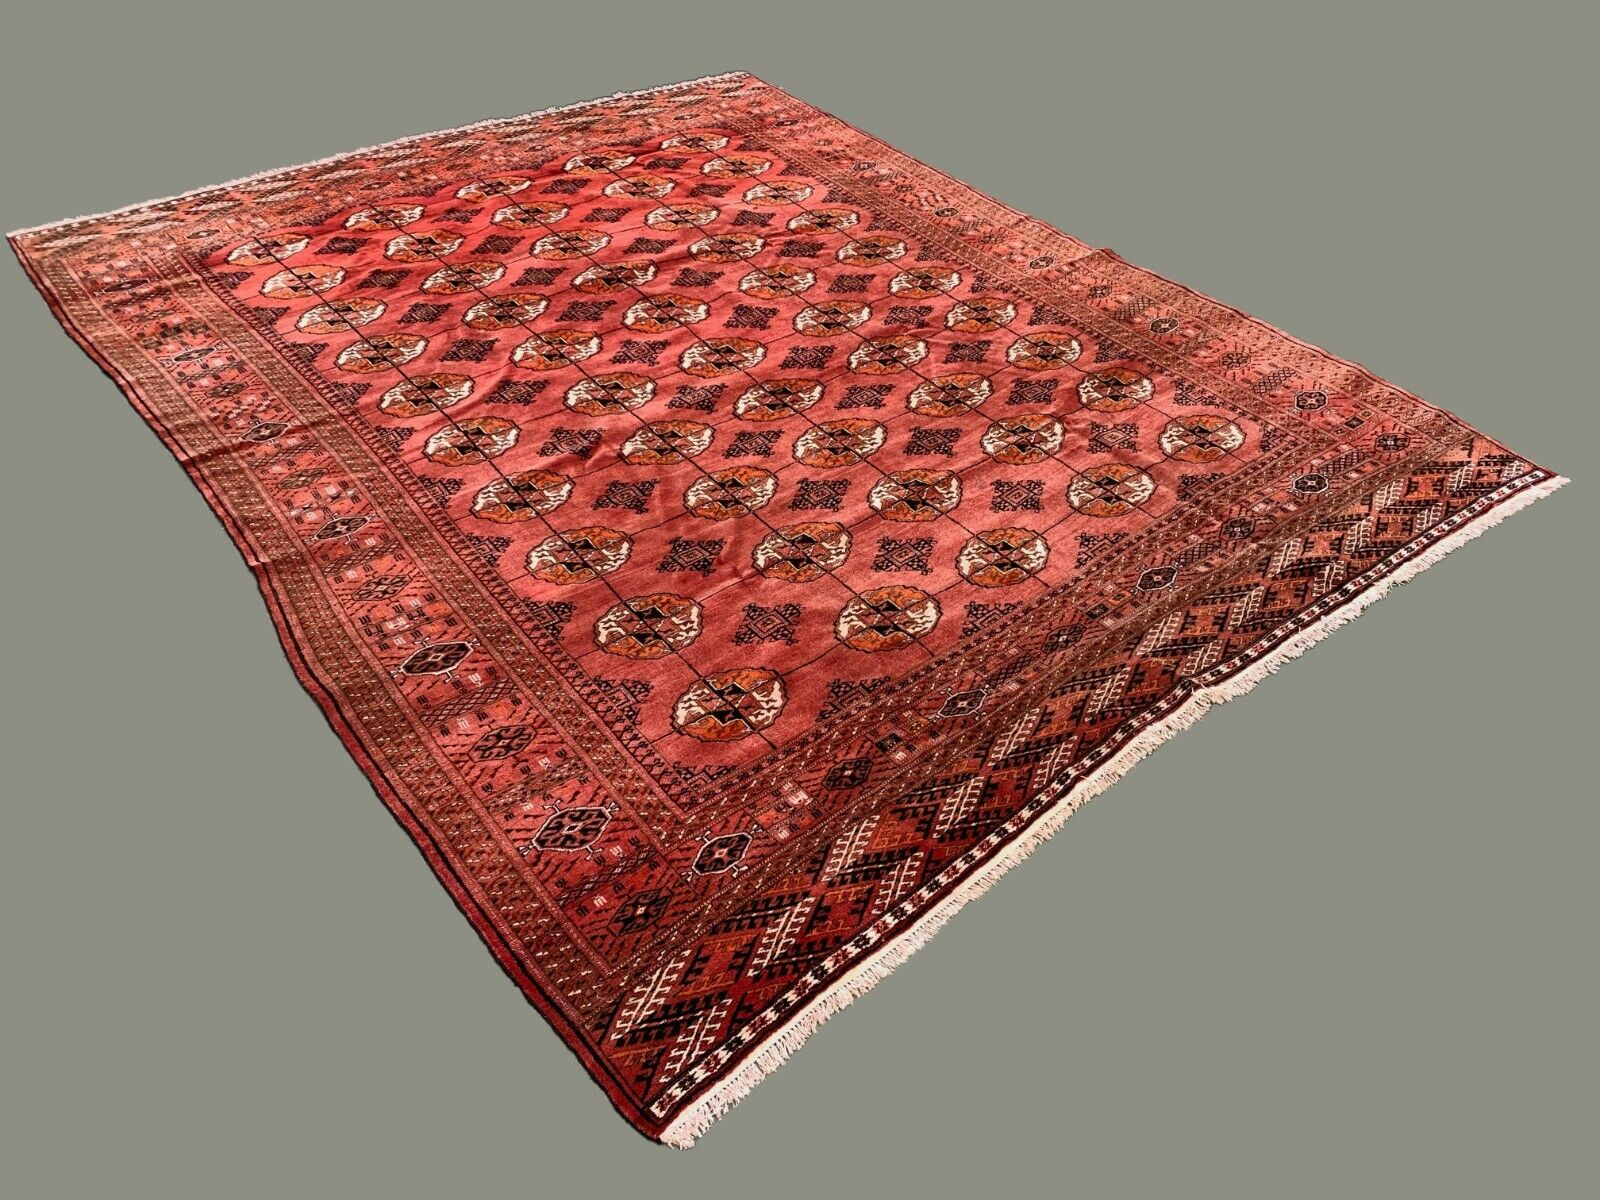 Antique Turkmen Tekke Main Carpet, 280x230 cm Turkoman Bokhara Red Black Beige